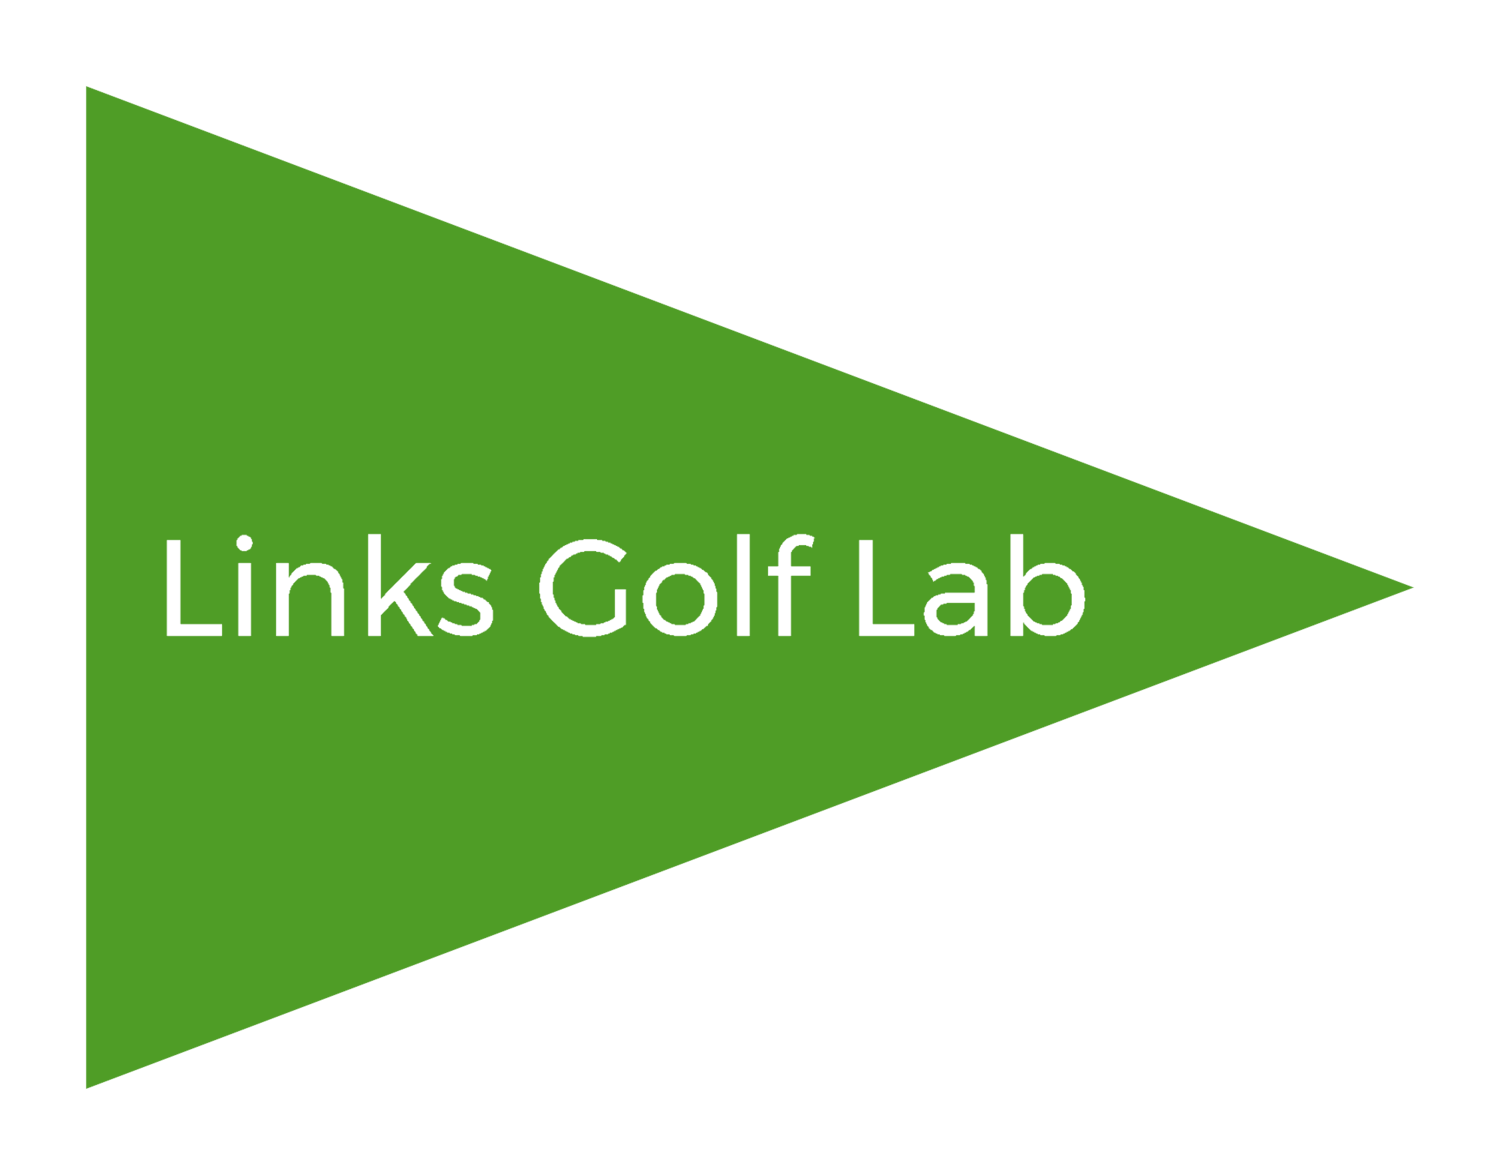 Links Golf Lab